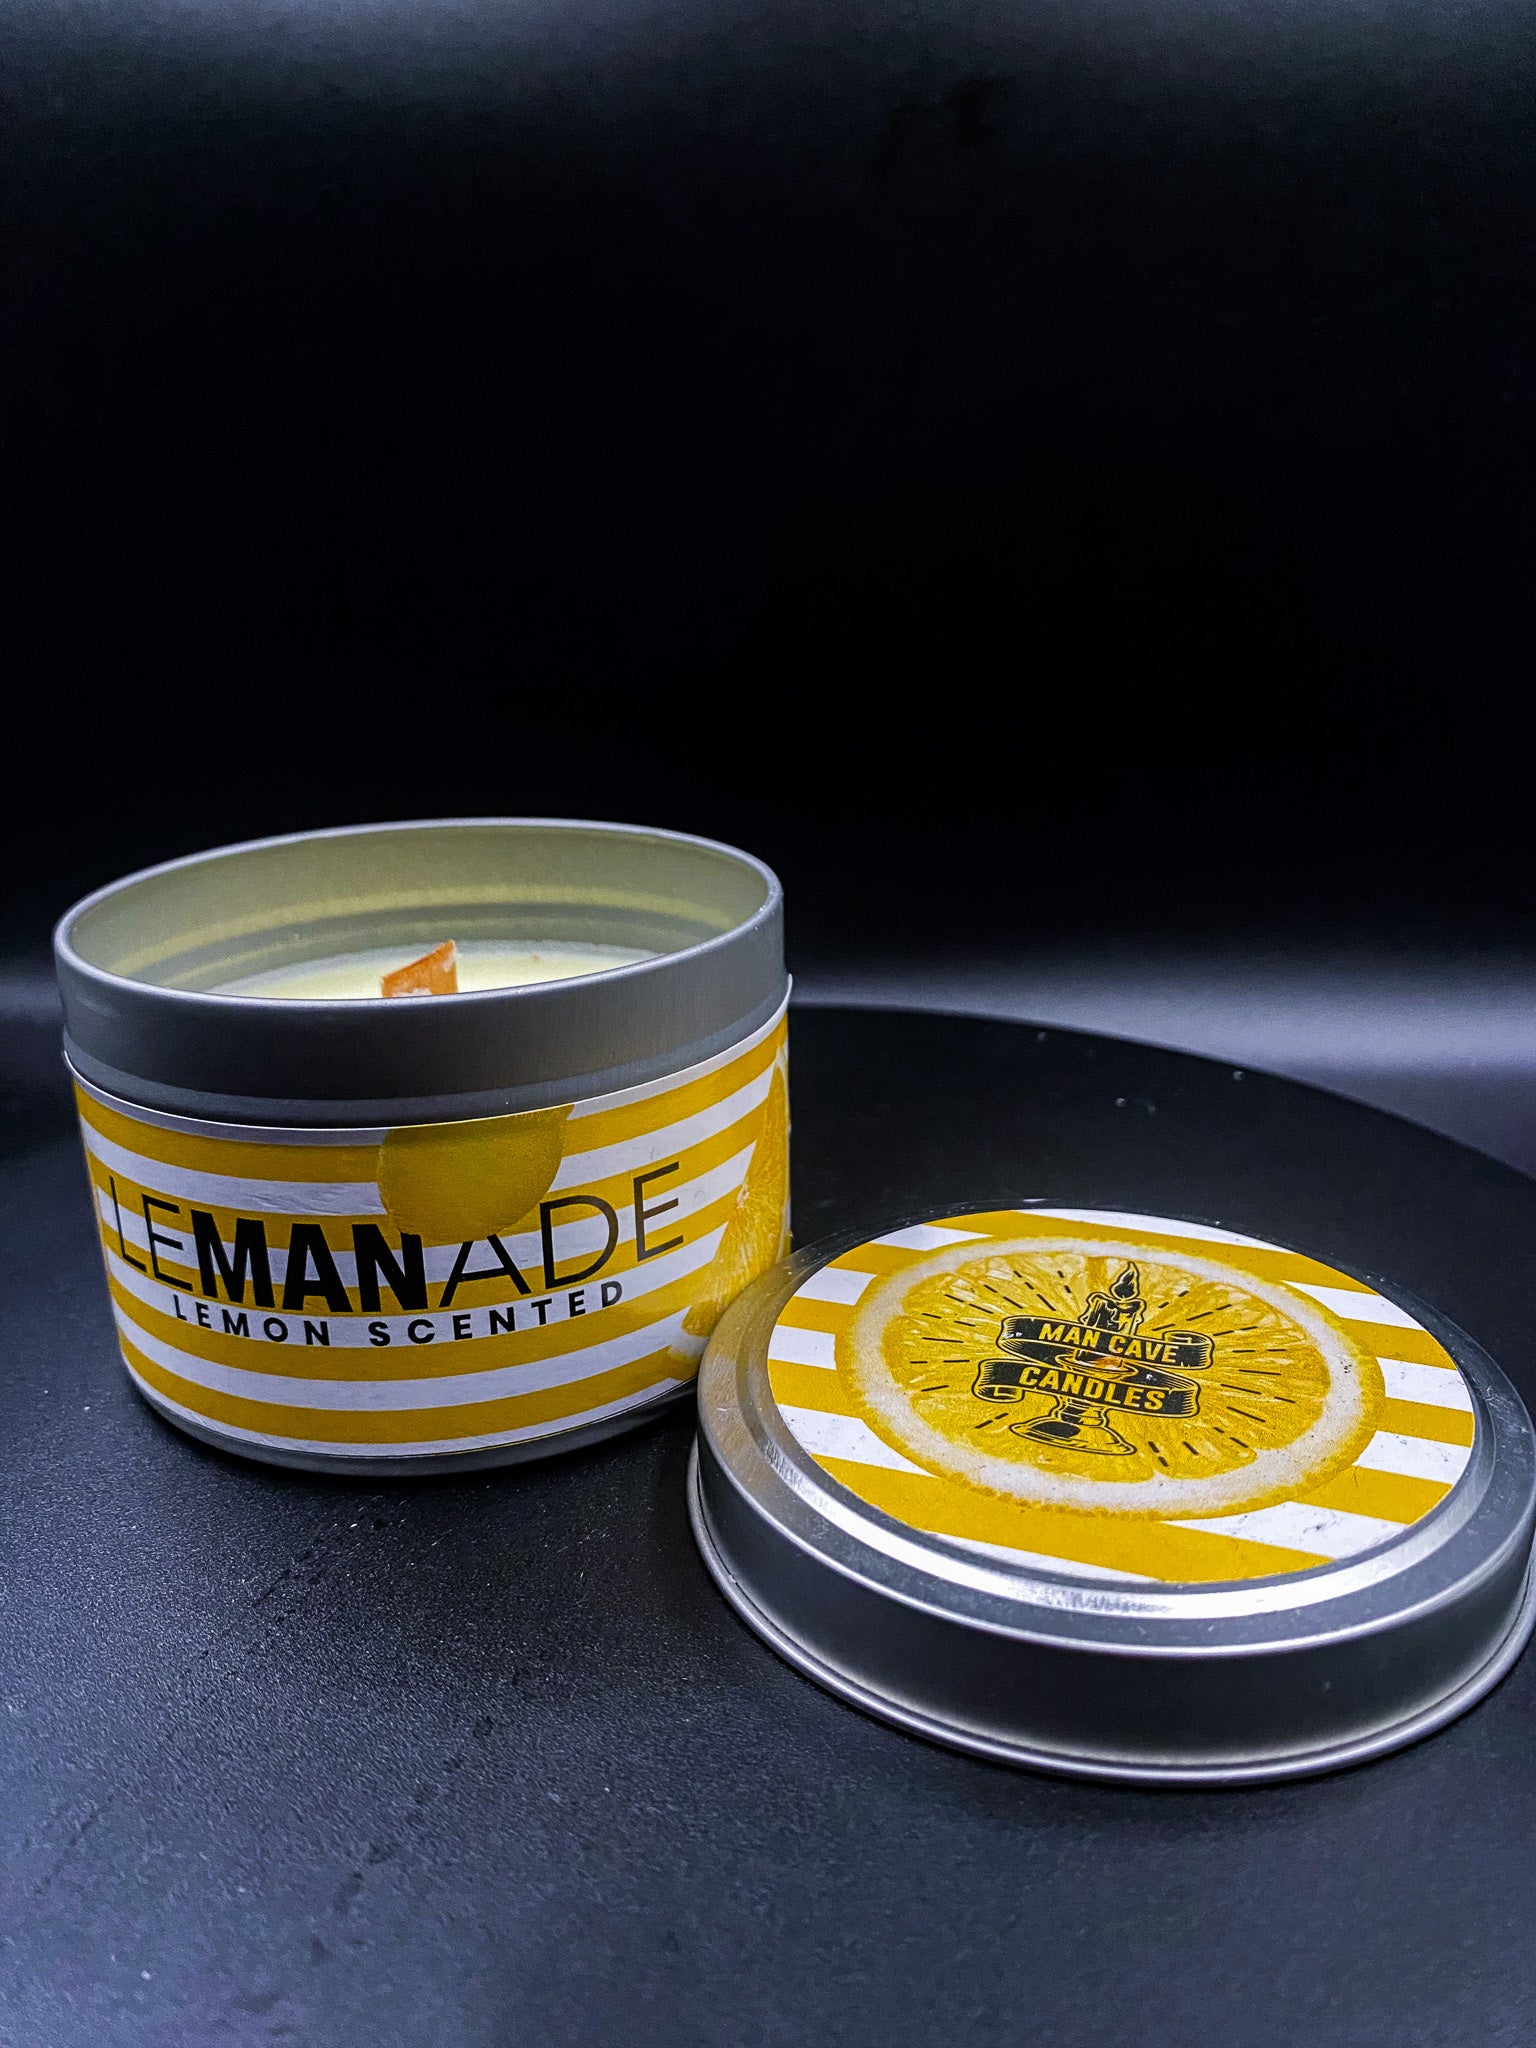 Lemanade - Lemon Scented Man Cave Candle